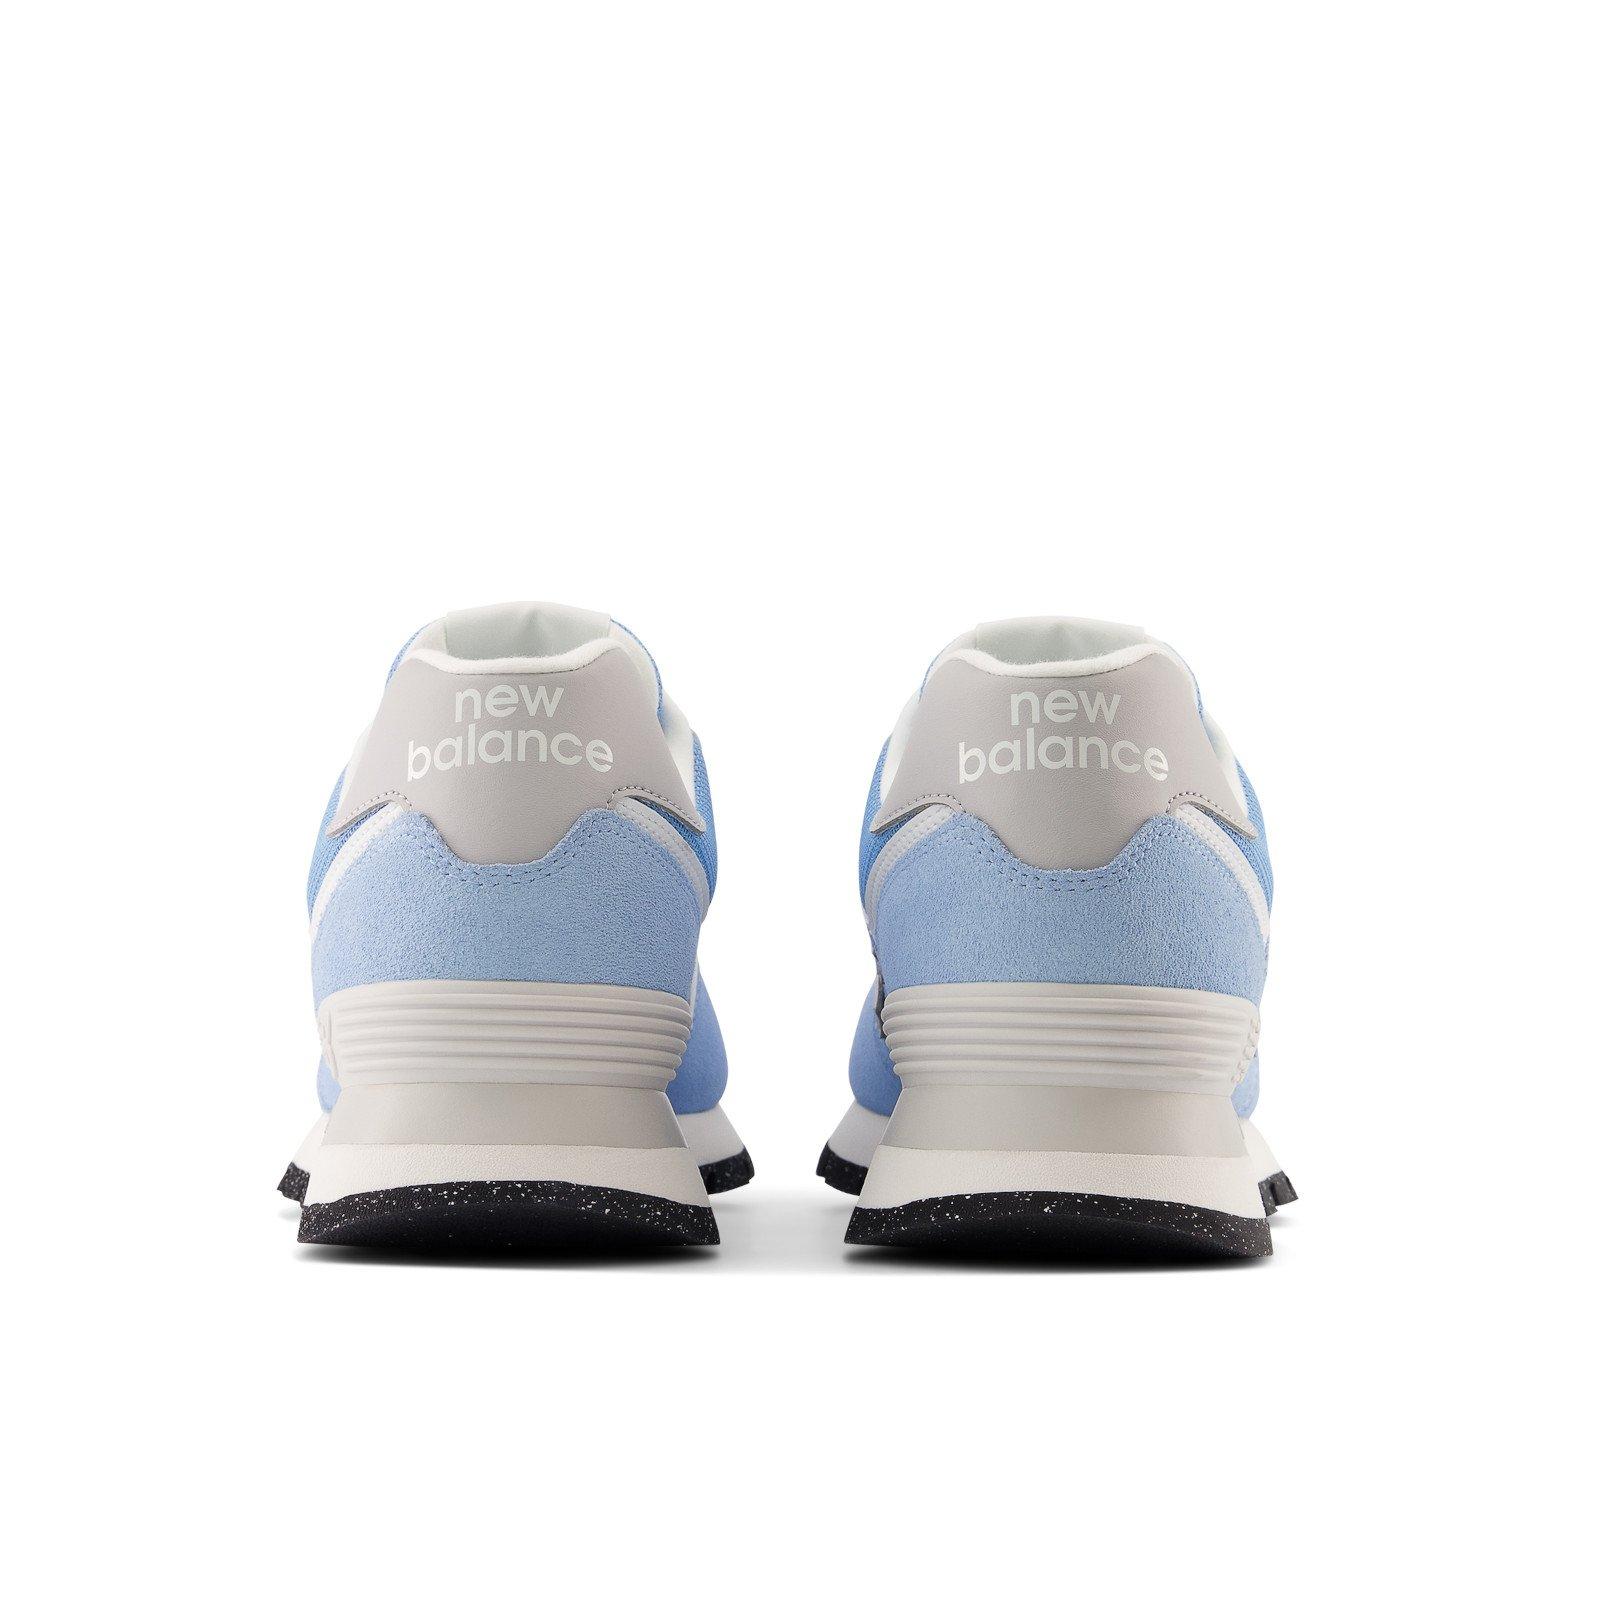 New Balance - Men's Electric blue 574 sneakers Men